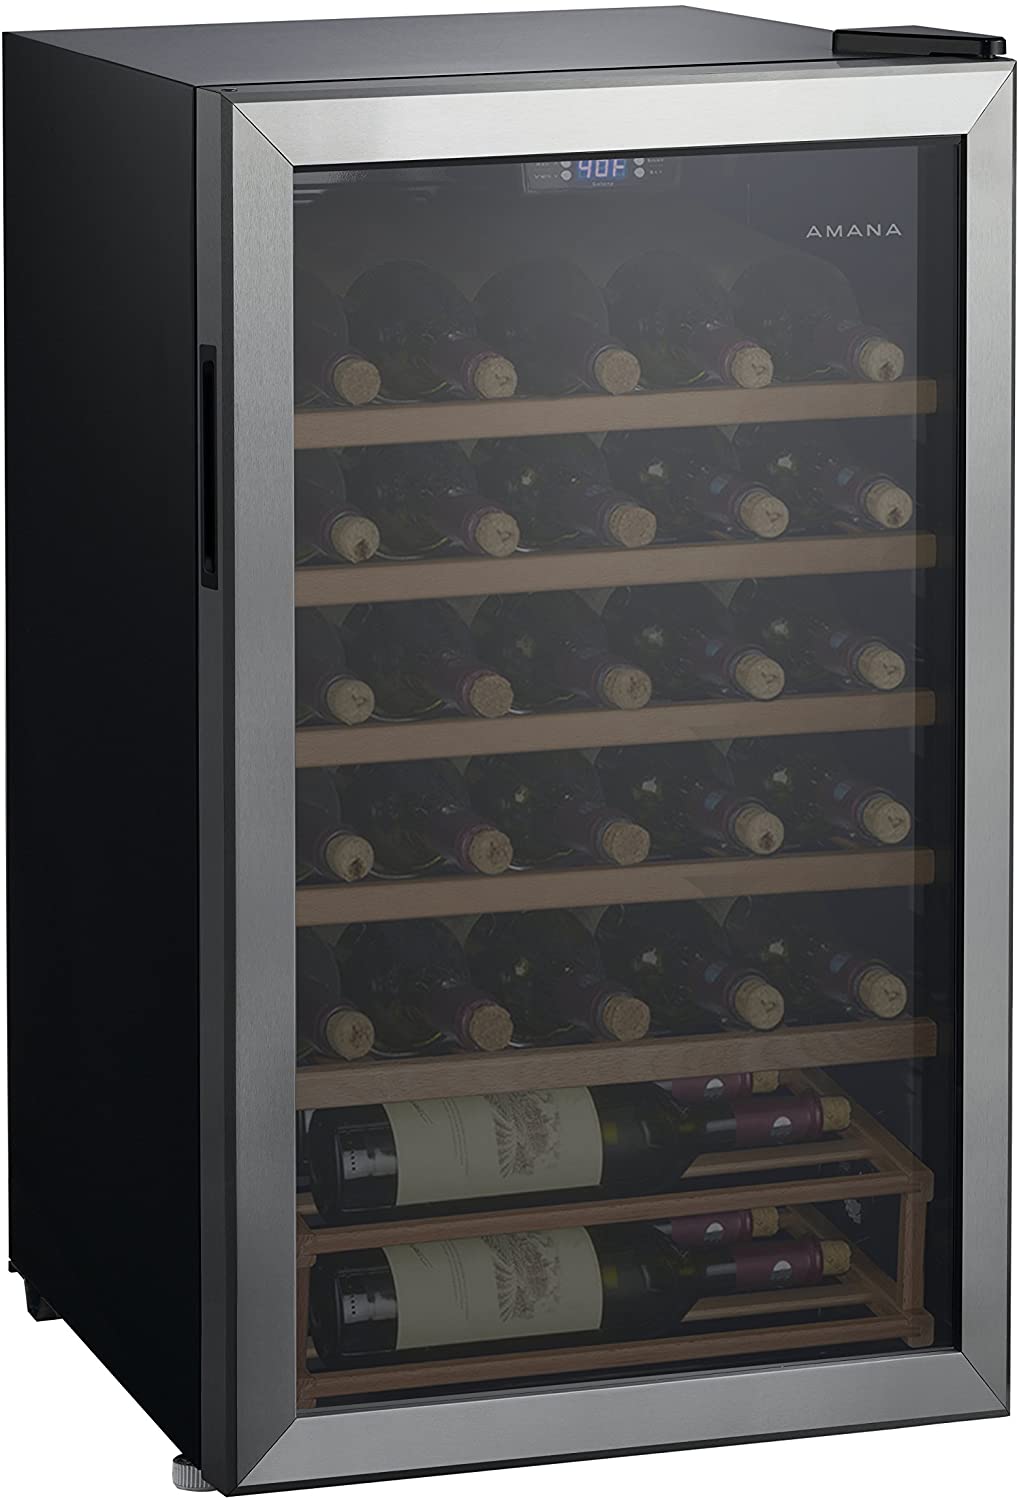 Amana 3.6 cu. Ft. 35 Bottle Wine Cooler w/ Stainless Steel Door, Adjustable Wire Shelves - AMAW35S2CW